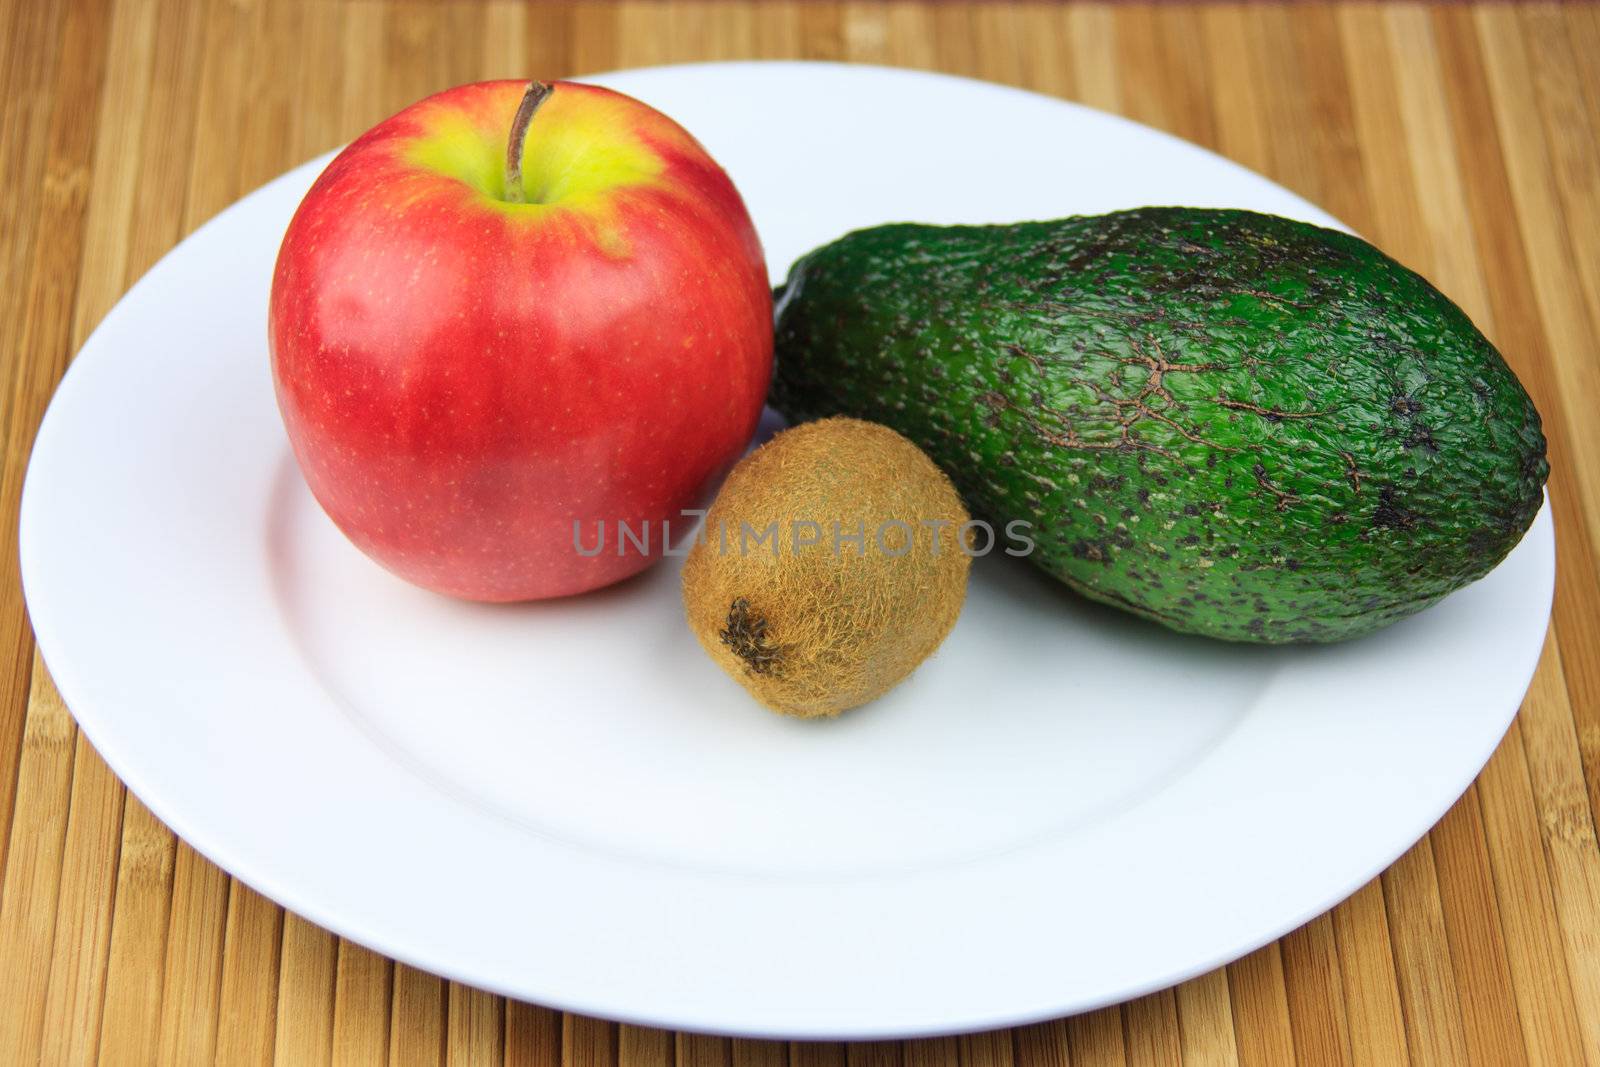 apple, kiwi and avocado on a plate by sfinks